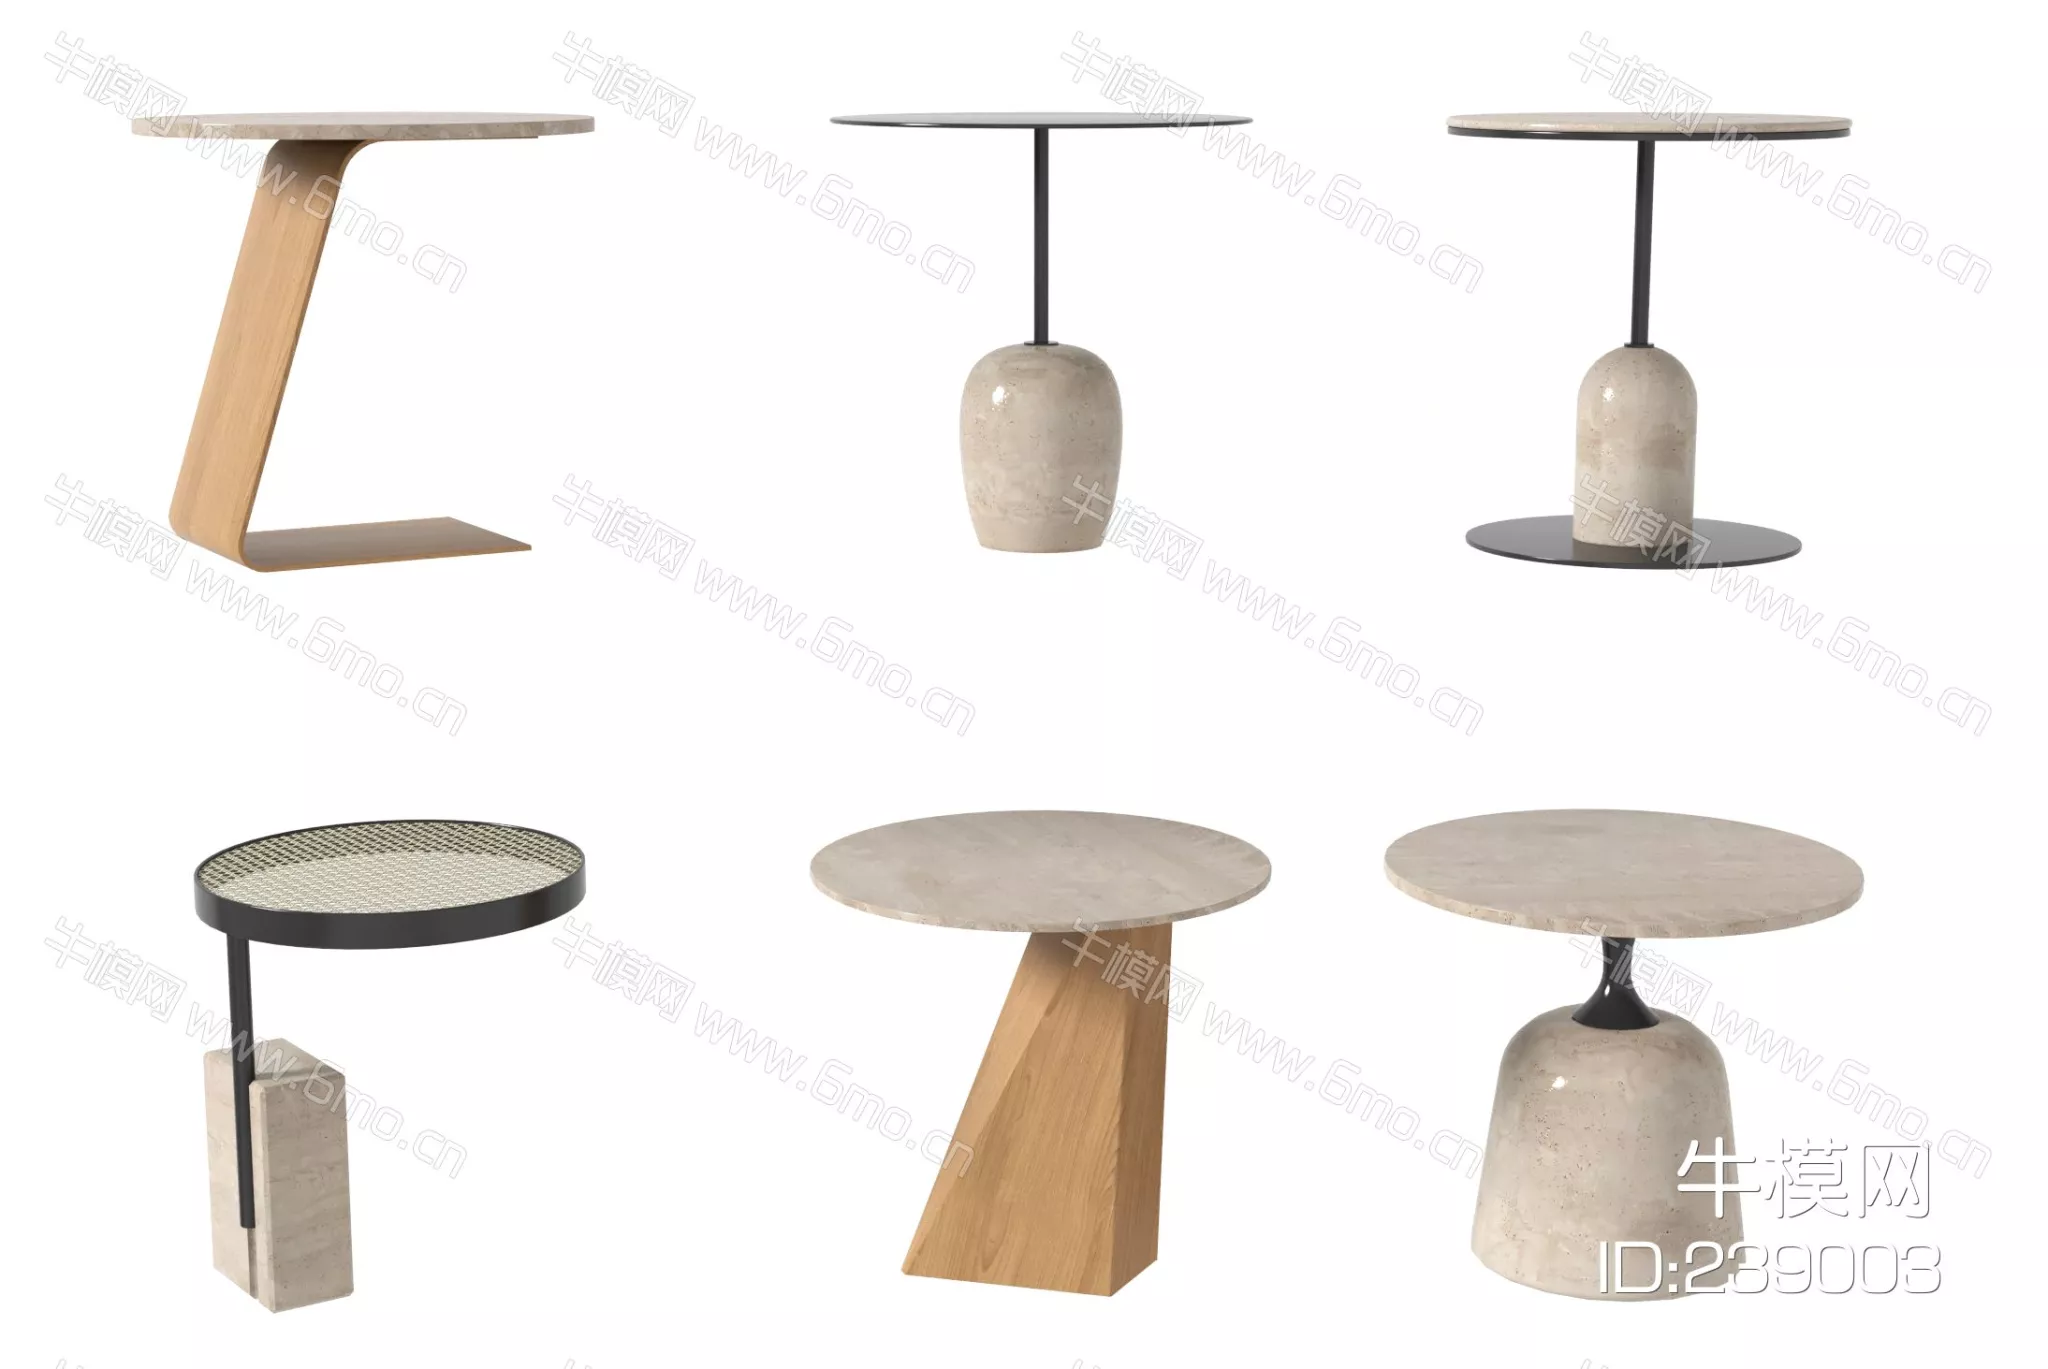 WABI SABI SIDE TABLE - SKETCHUP 3D MODEL - VRAY - 239003